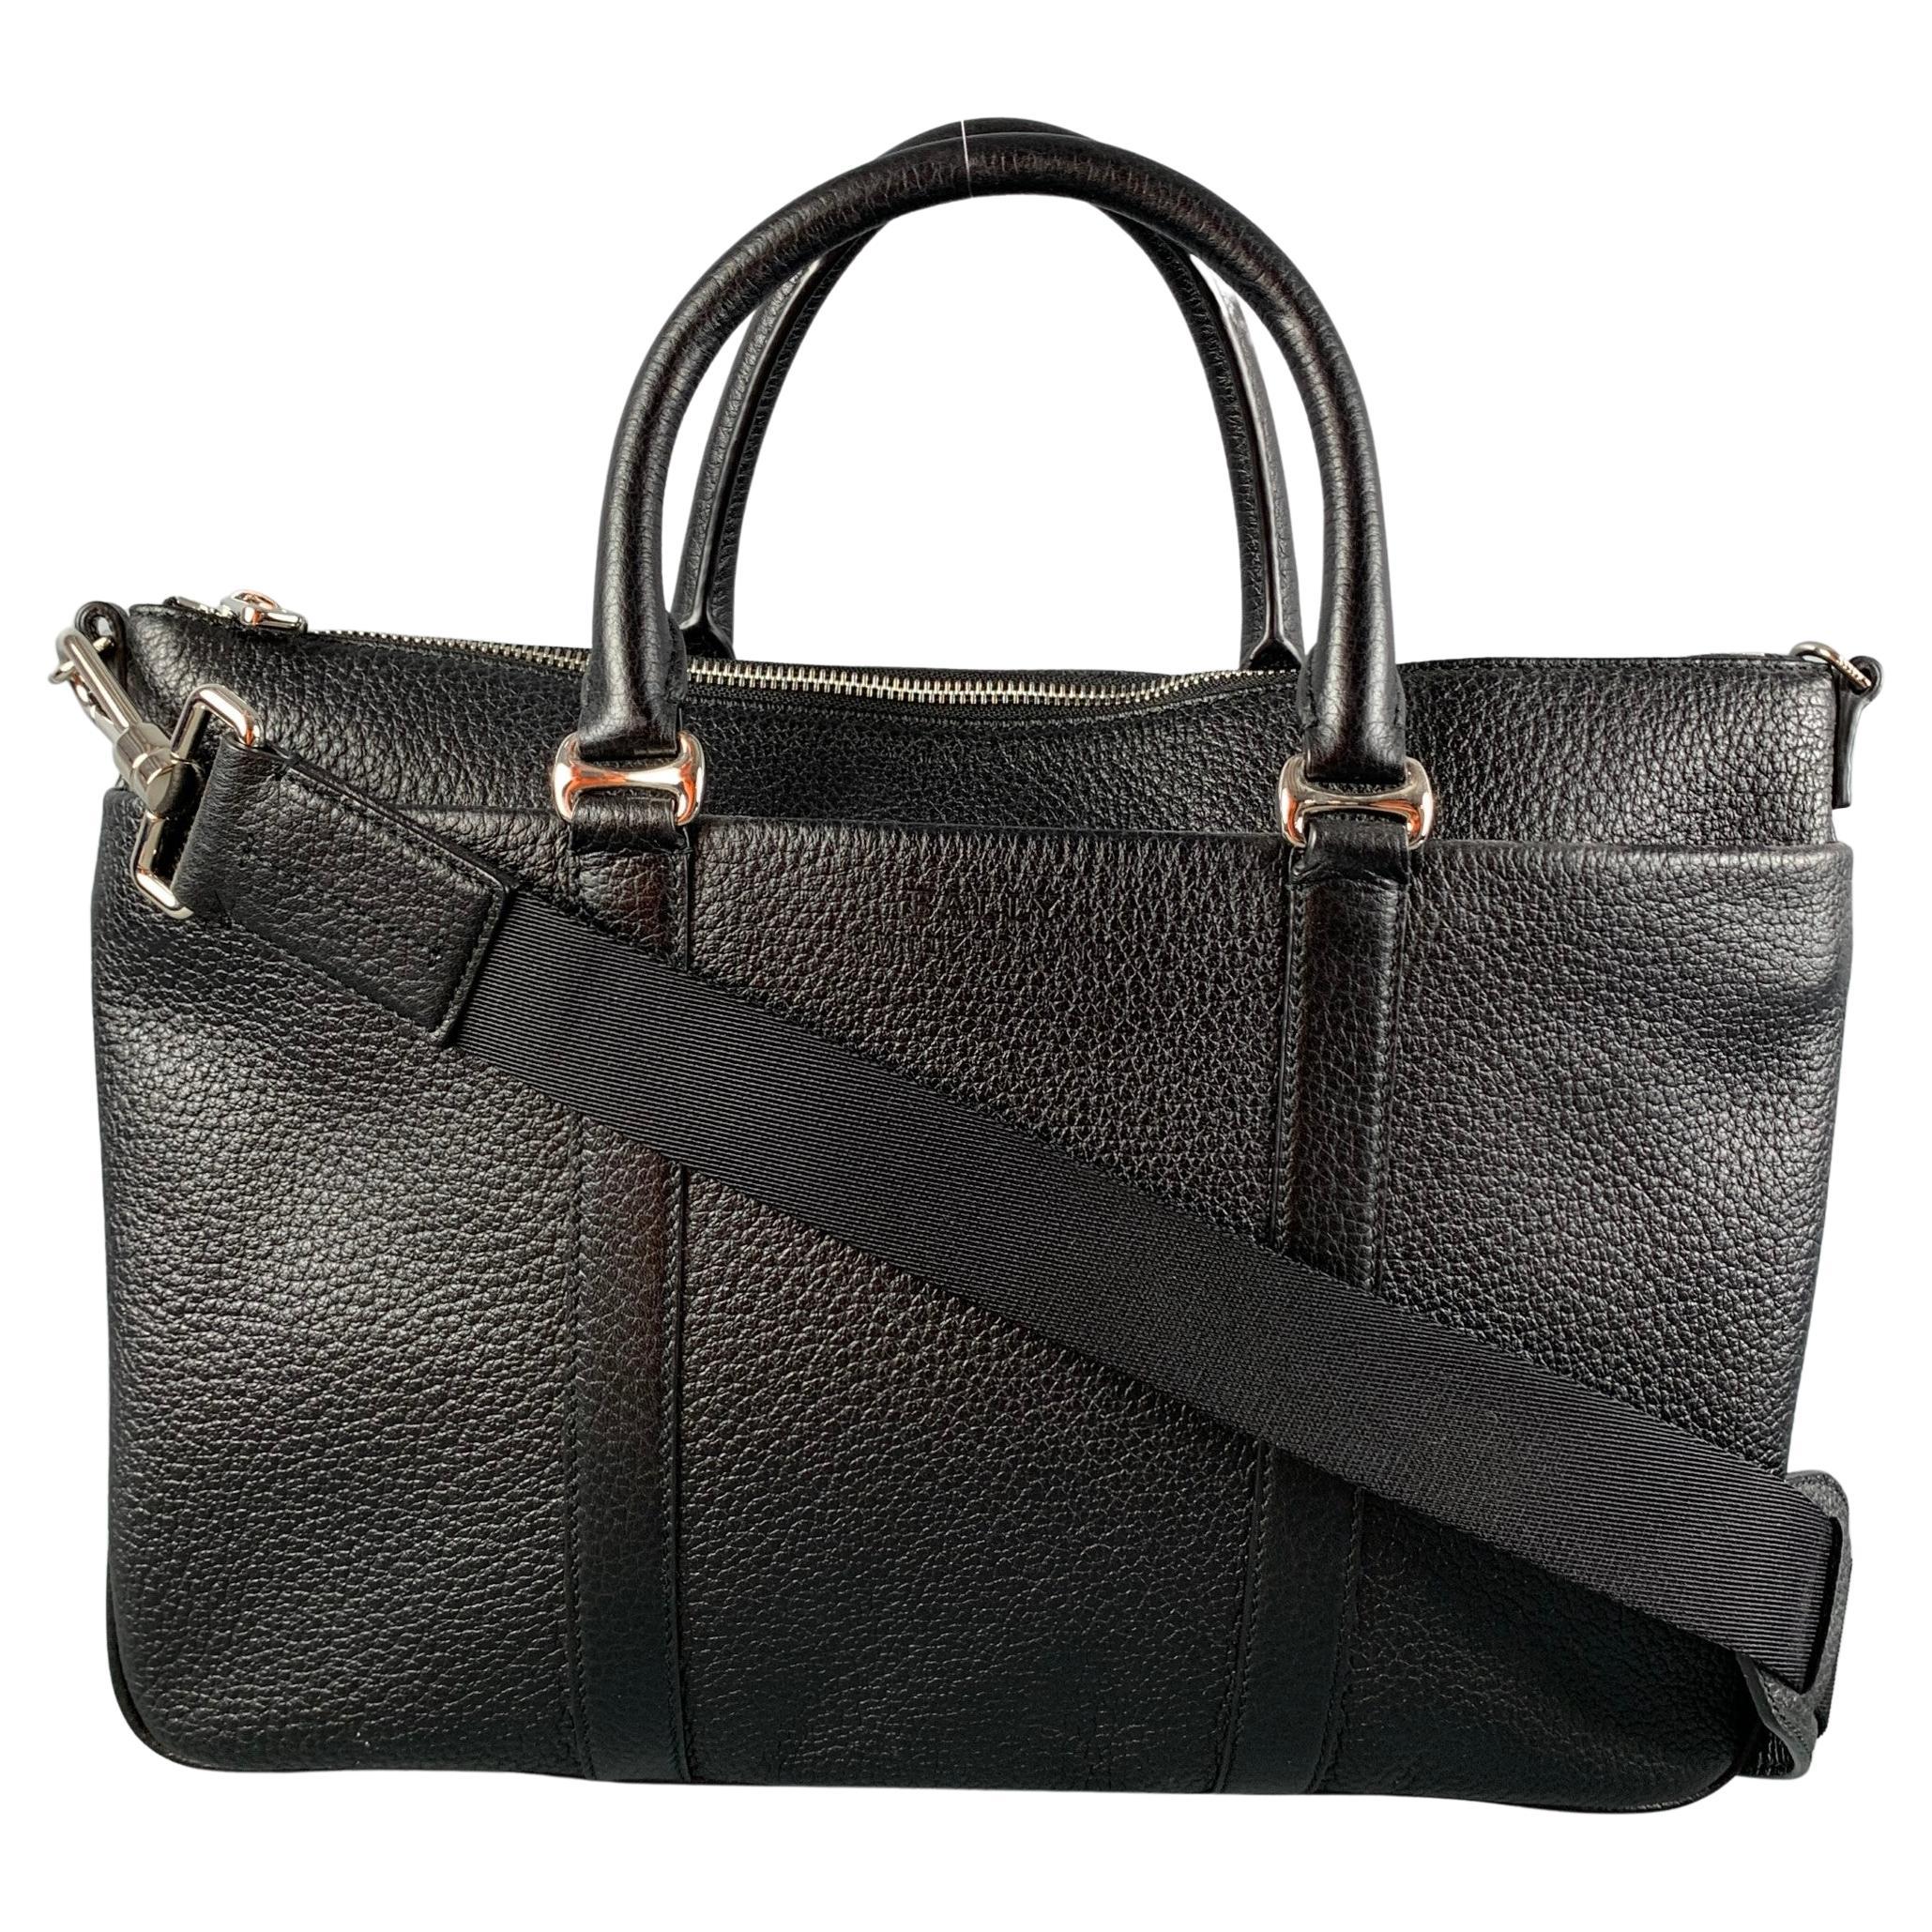 BALLY Black Pebble Grain Leather Shoulder Bag